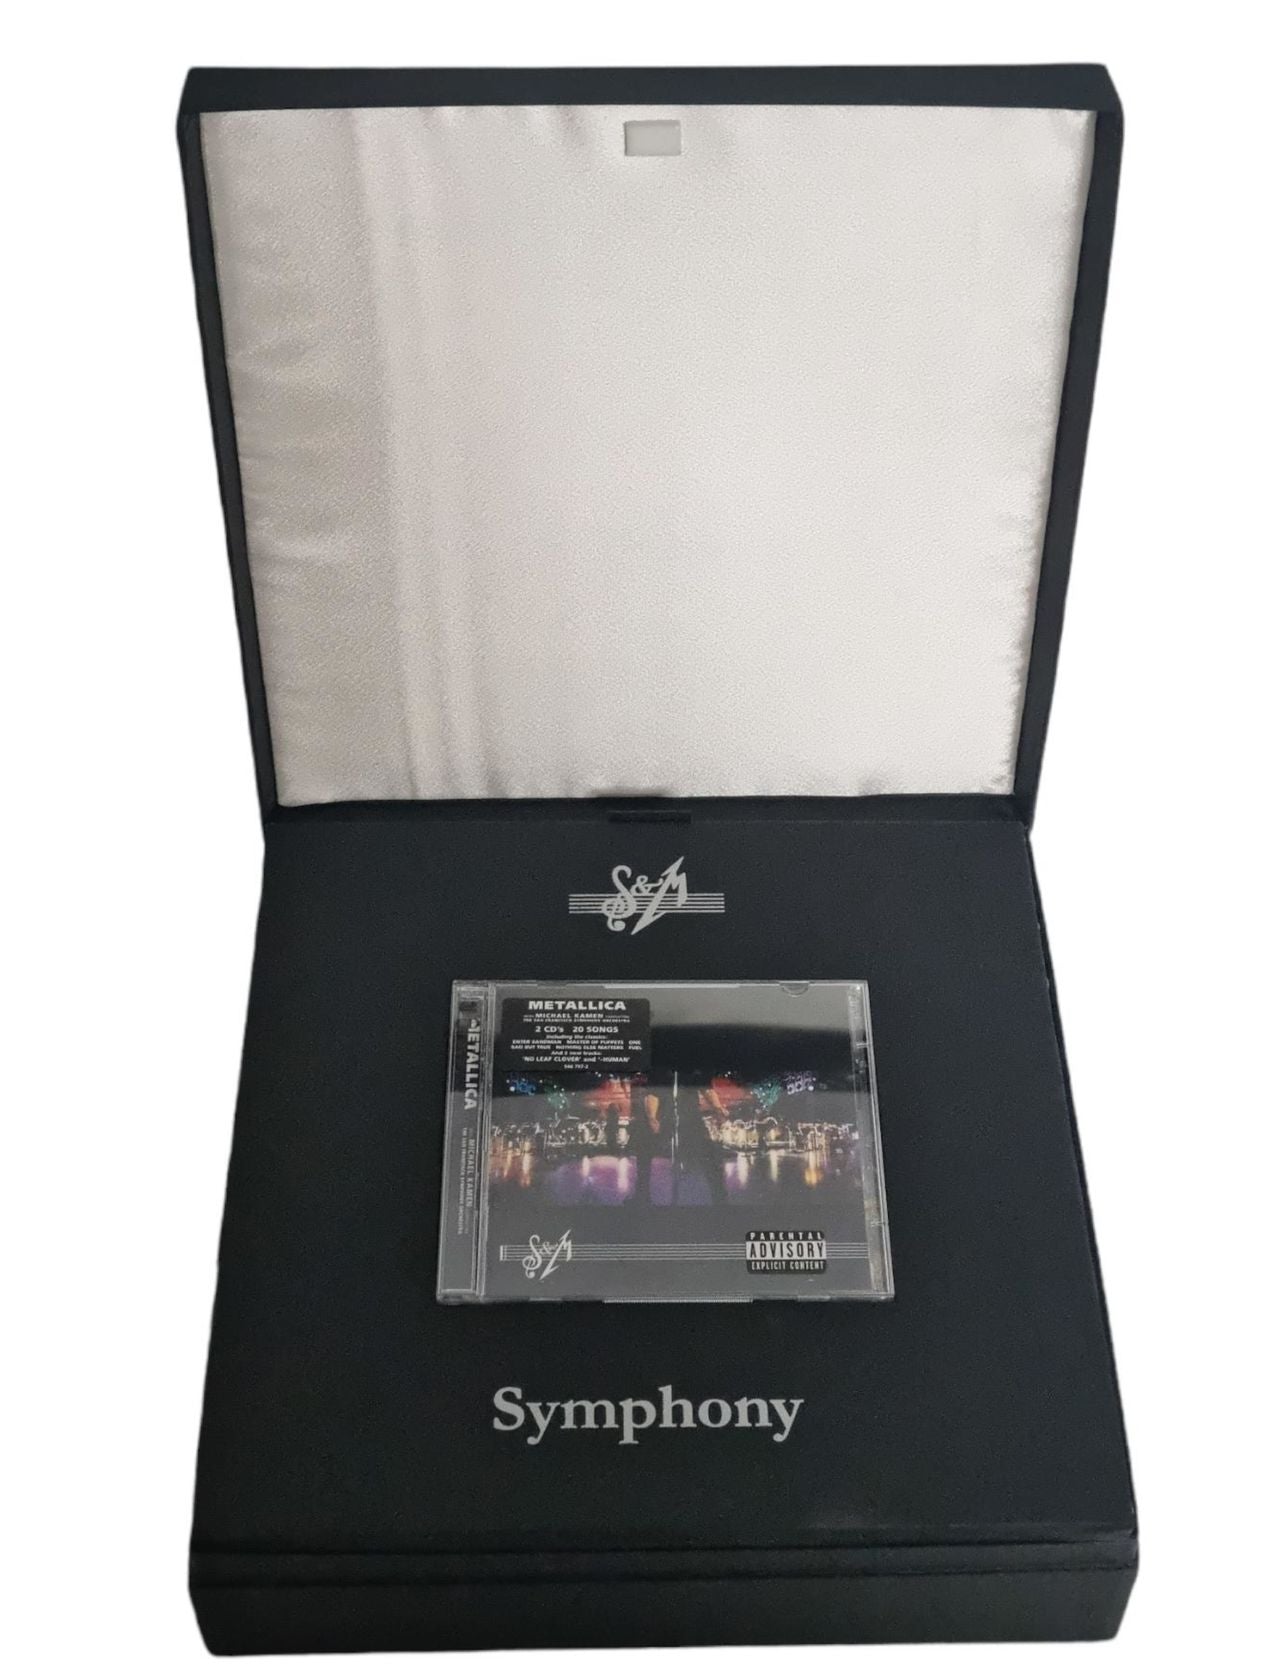 Metallica S&M Symphony German Box set